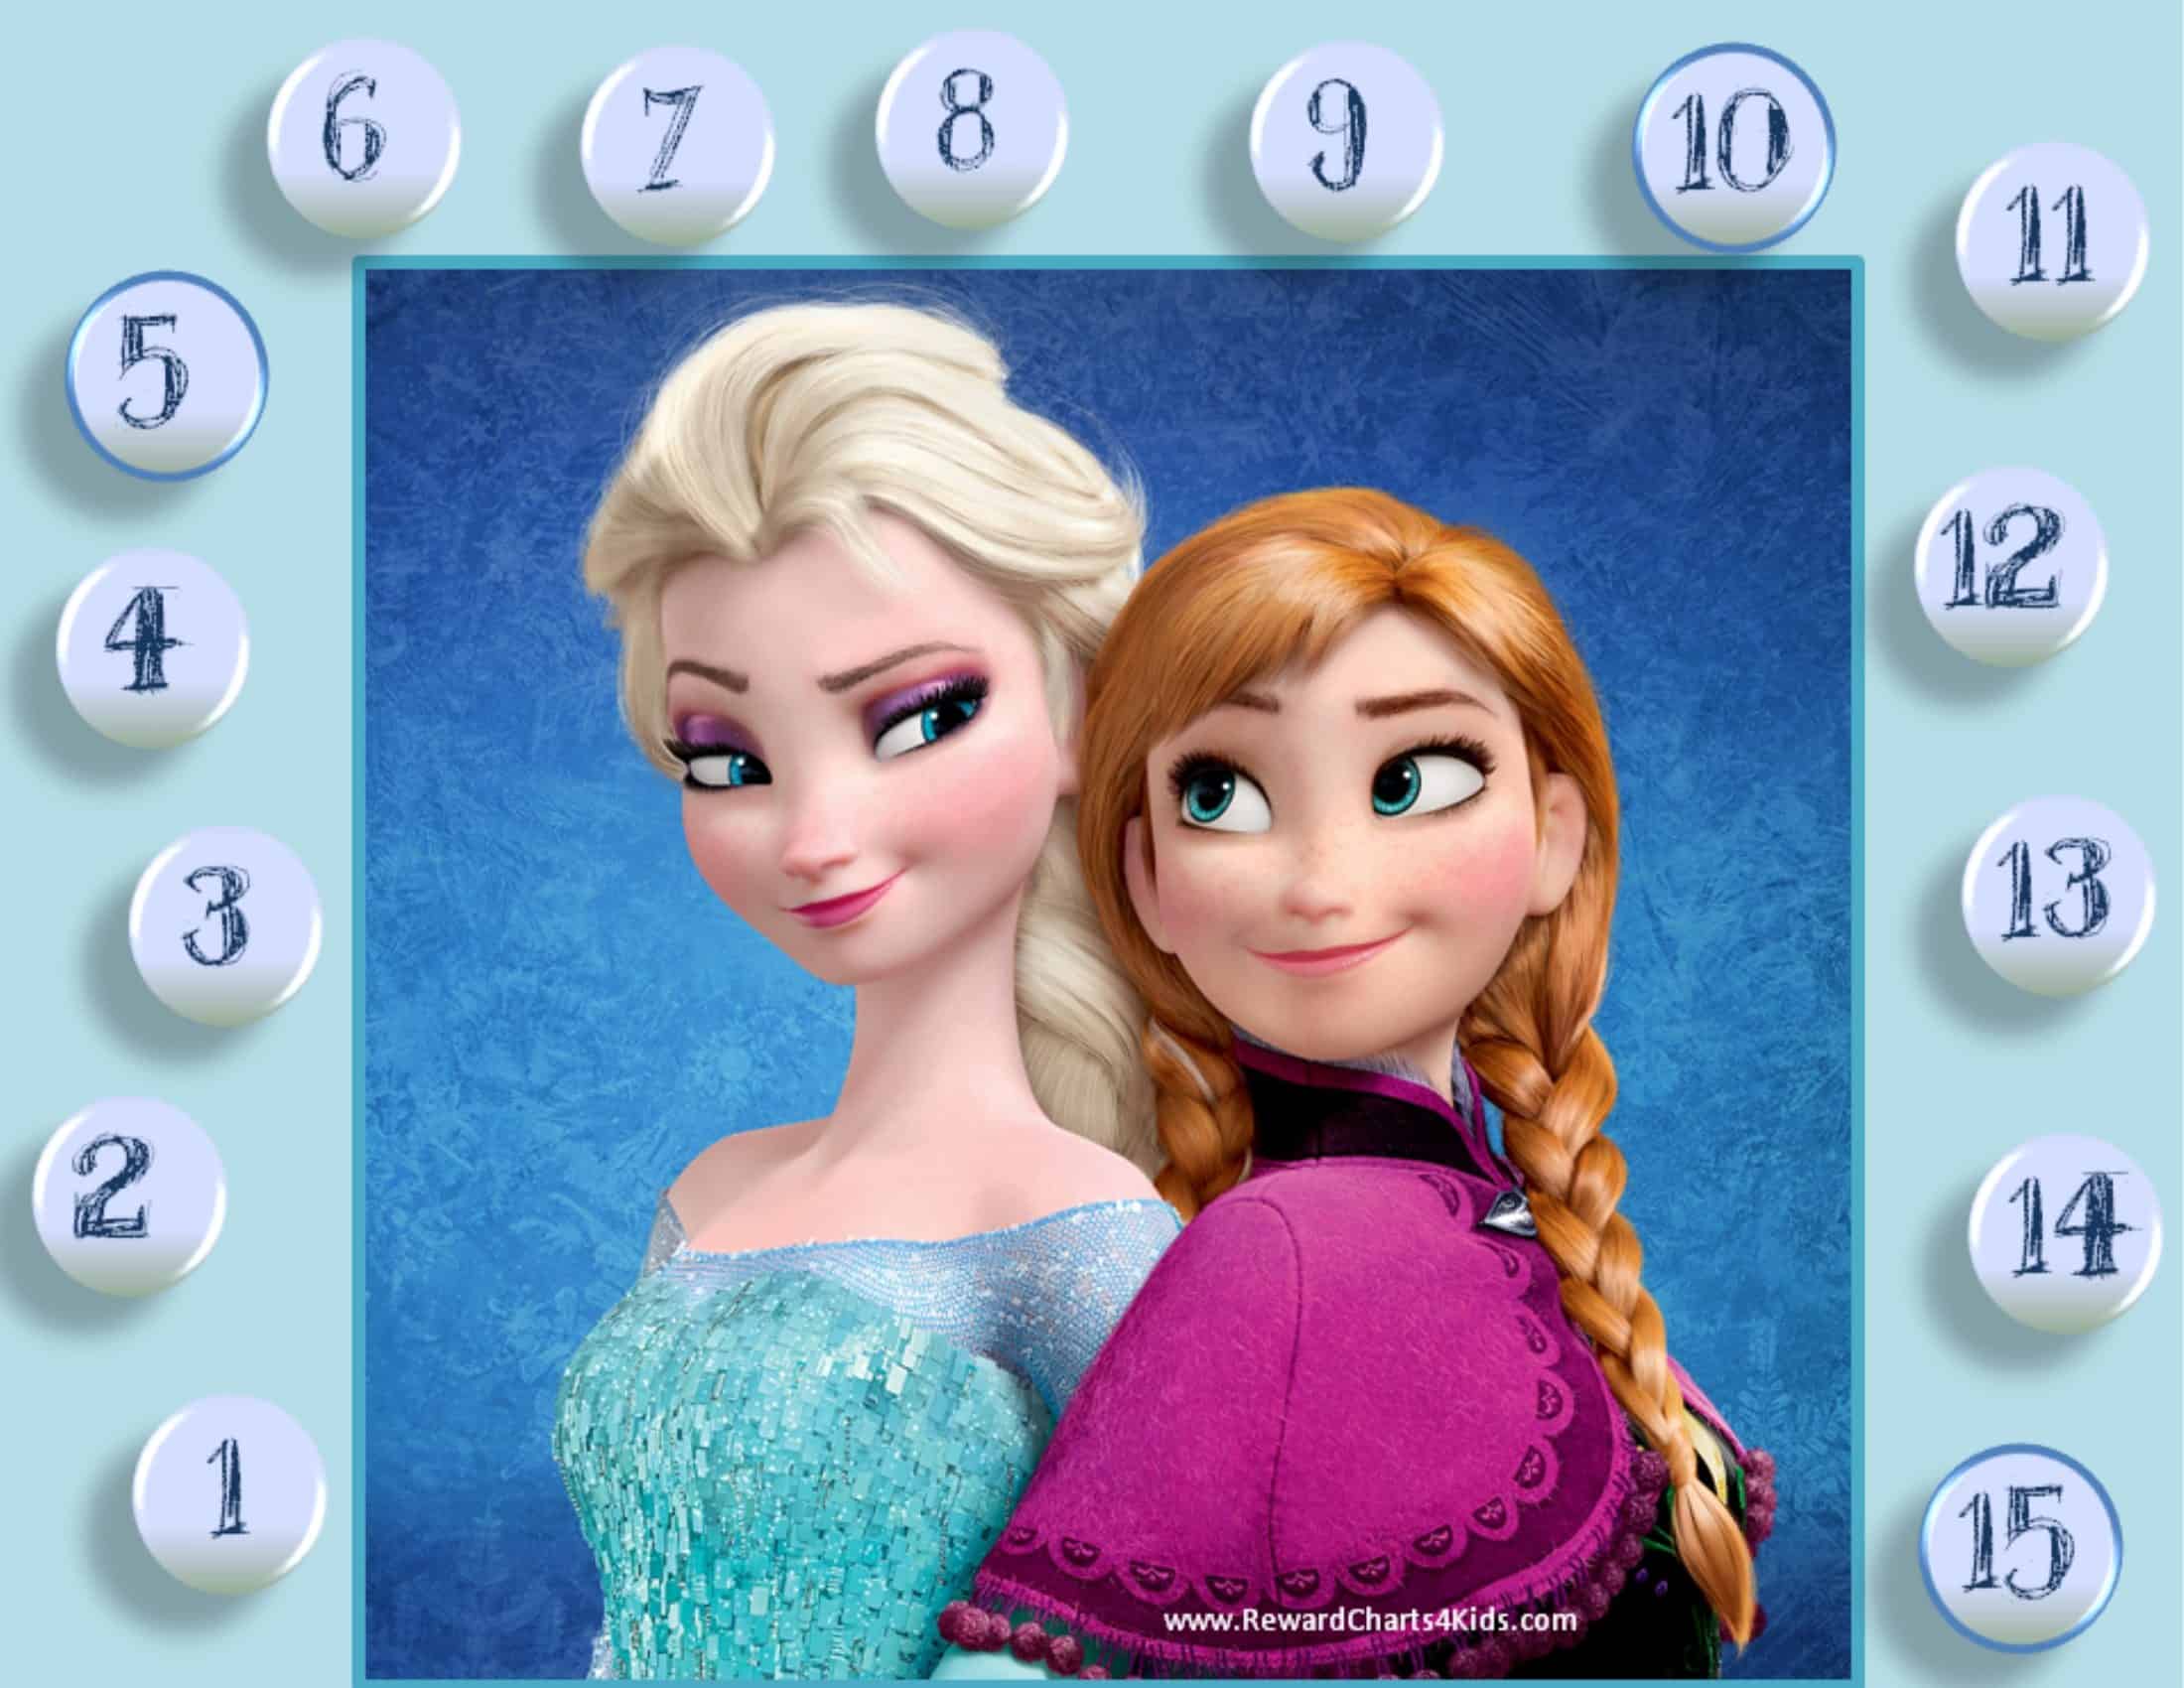 Frozen 2 Reward Charts Sticker Sheets Felt Tip Pen Fnrew2 for sale online